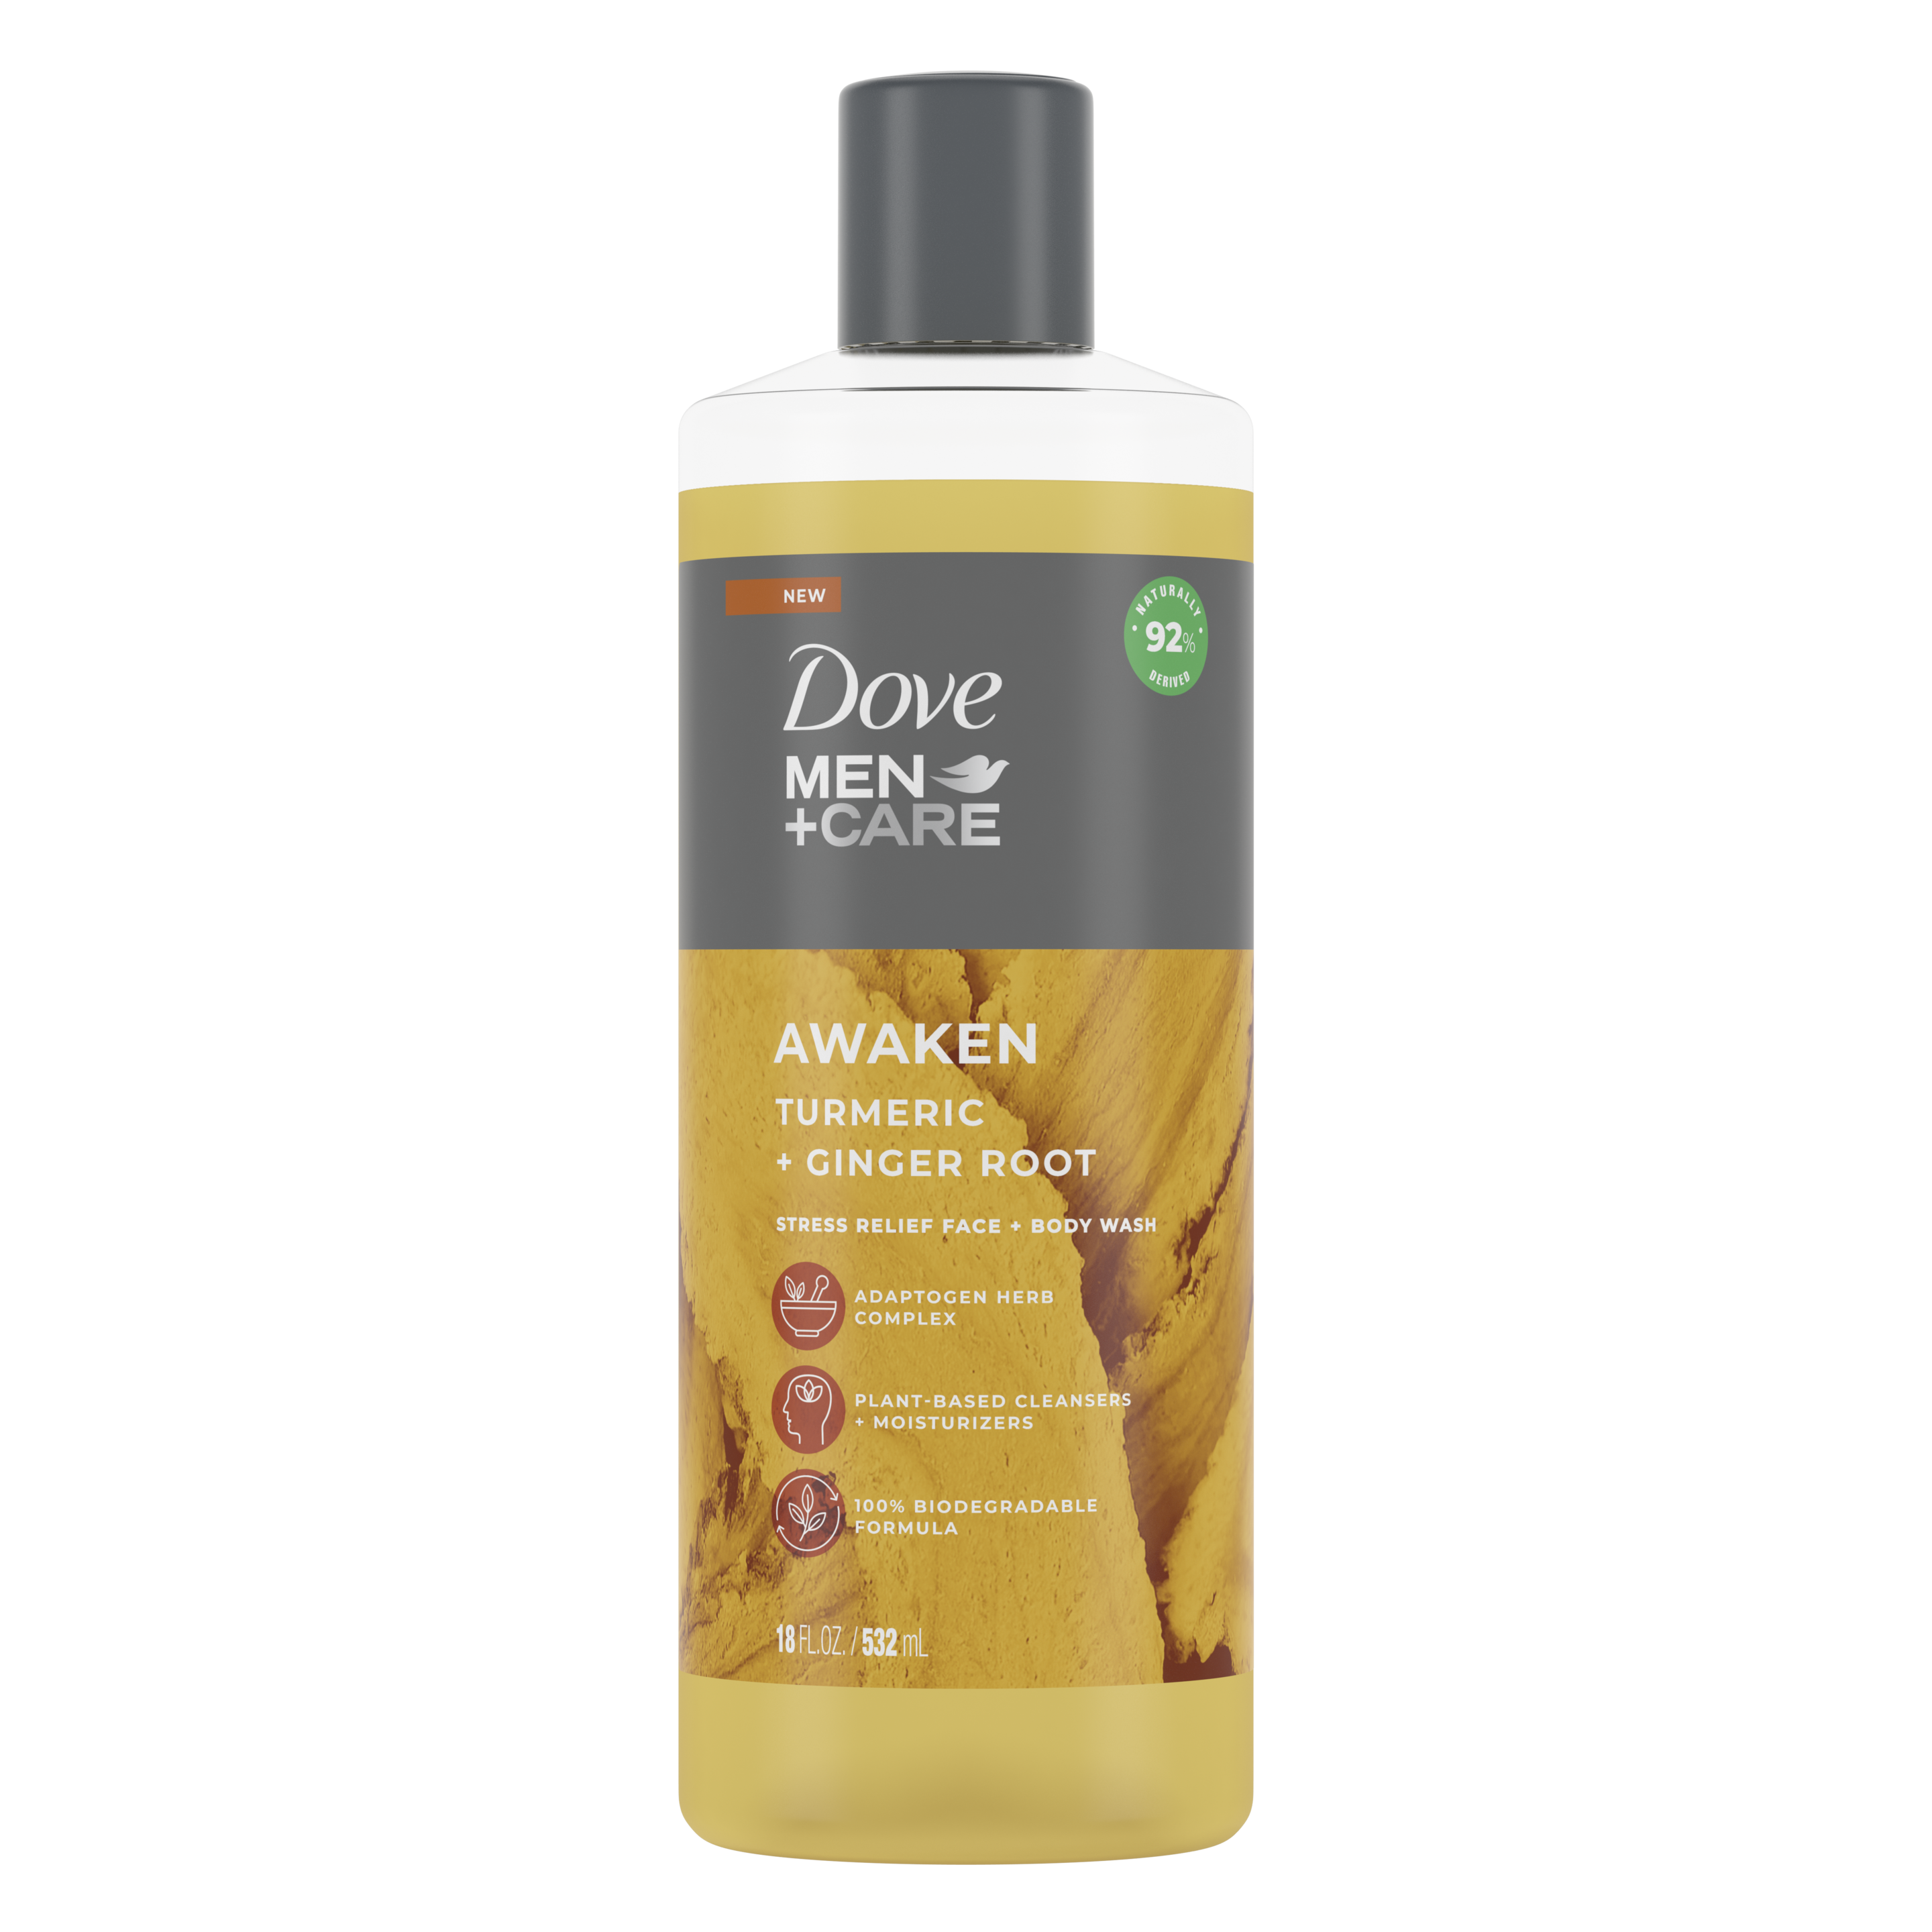 Dove Men+Care Awaken Turmeric + Ginger Root Face + Body Wash